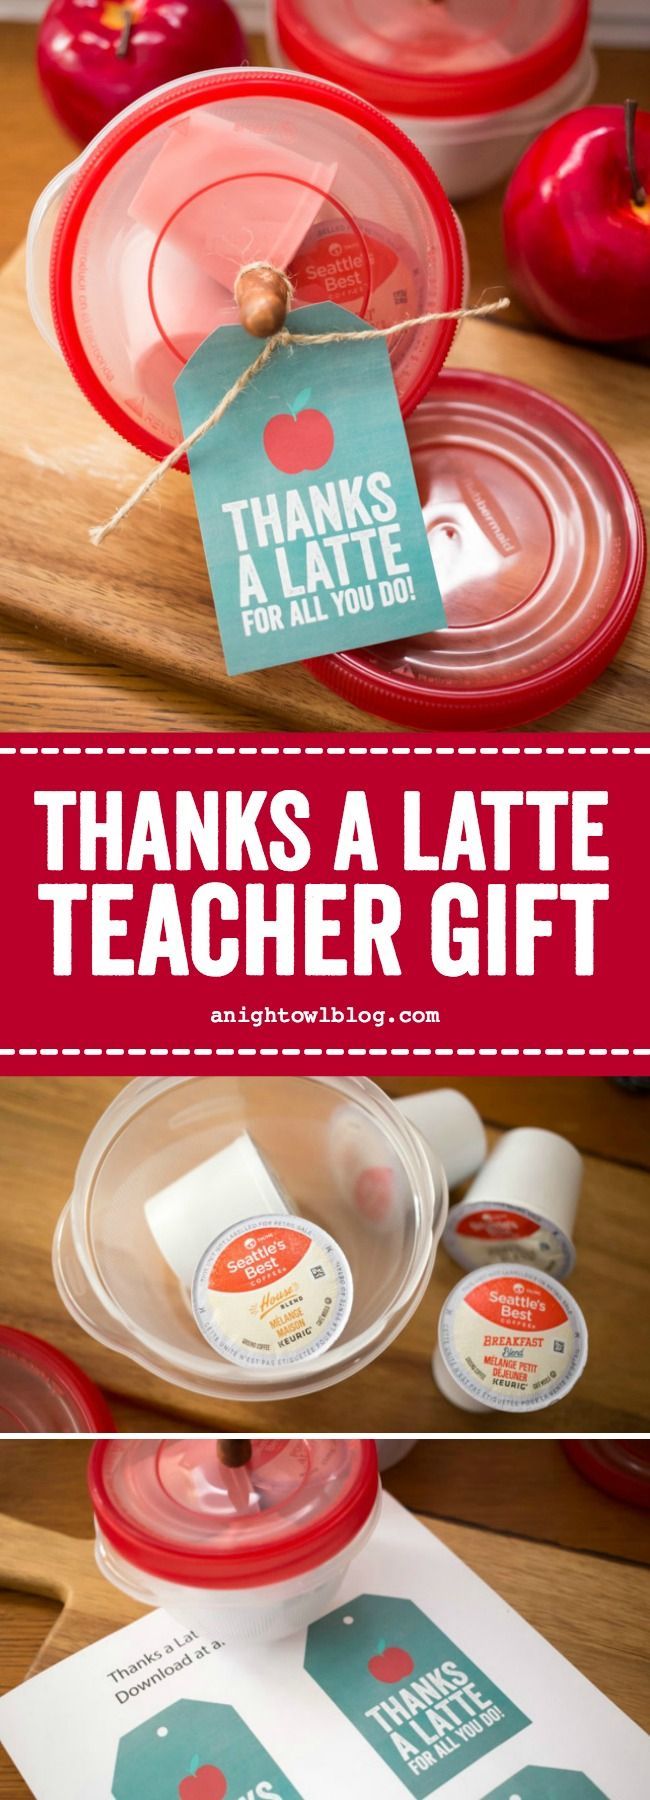 Thanks a Latte Teacher Gift